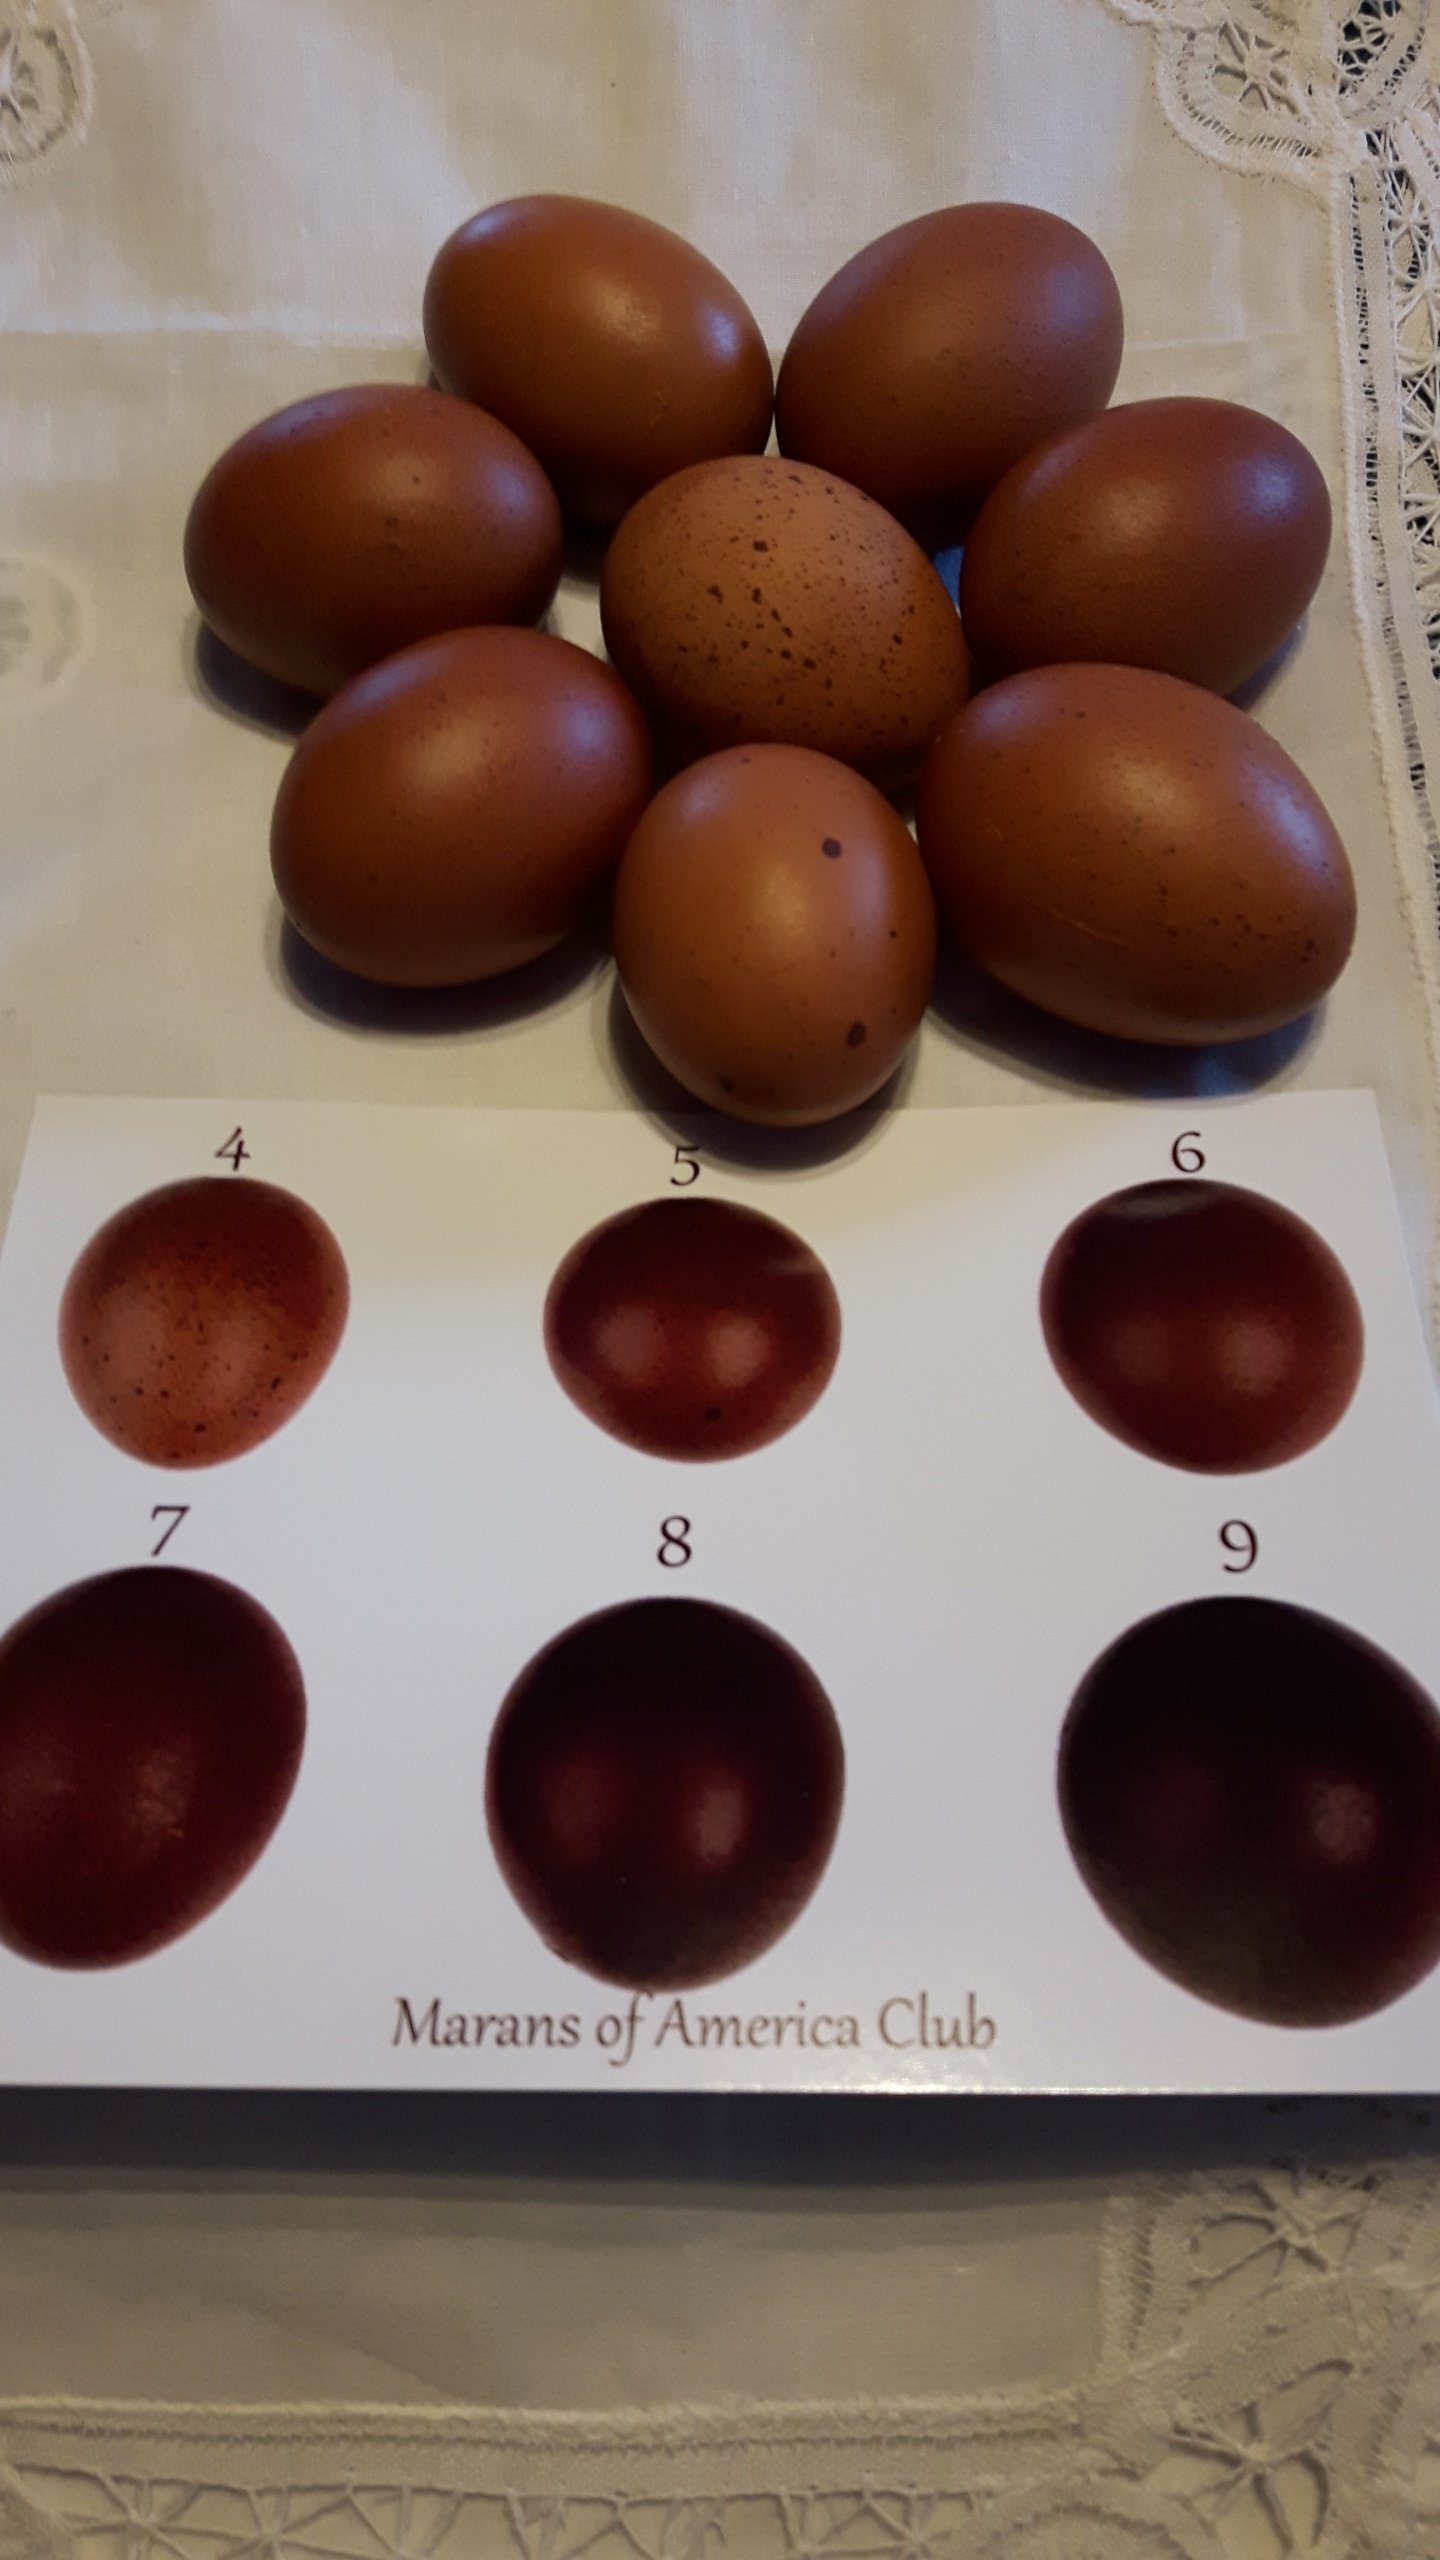 Black Copper Marans Eggs level 5 -7 on the Marans Chart.